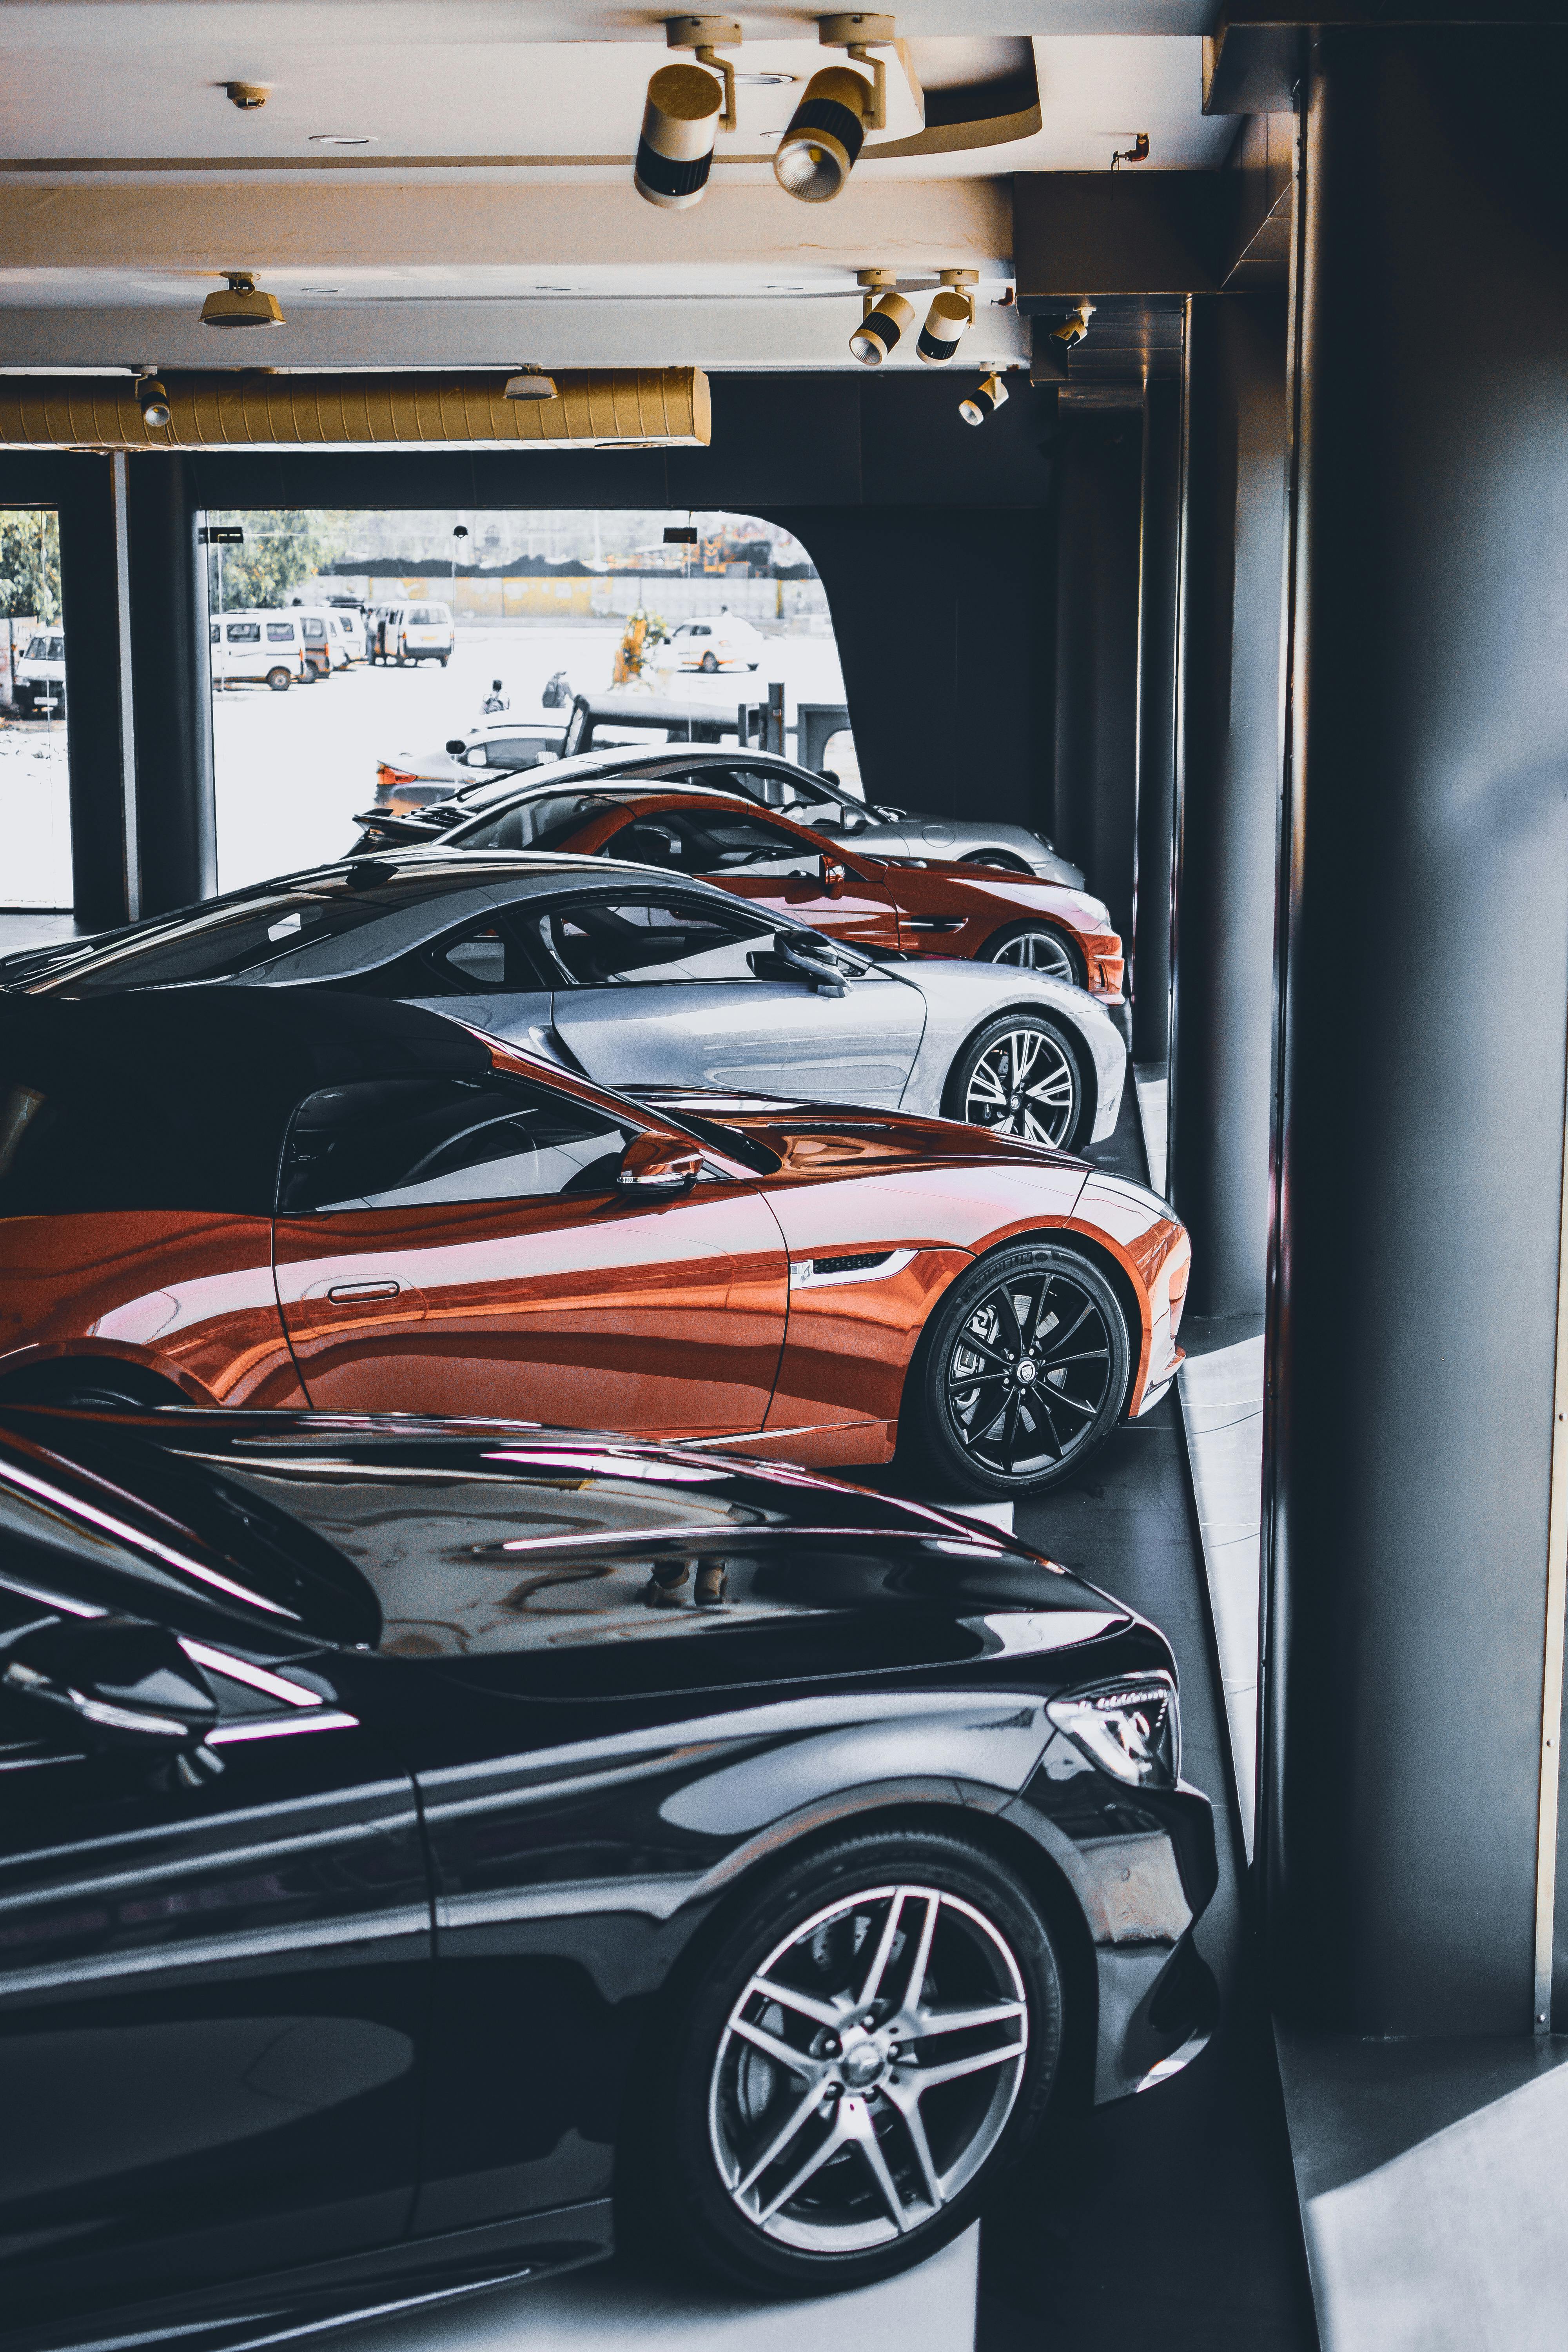 Five Assorted-color Cars Parked Inside Room